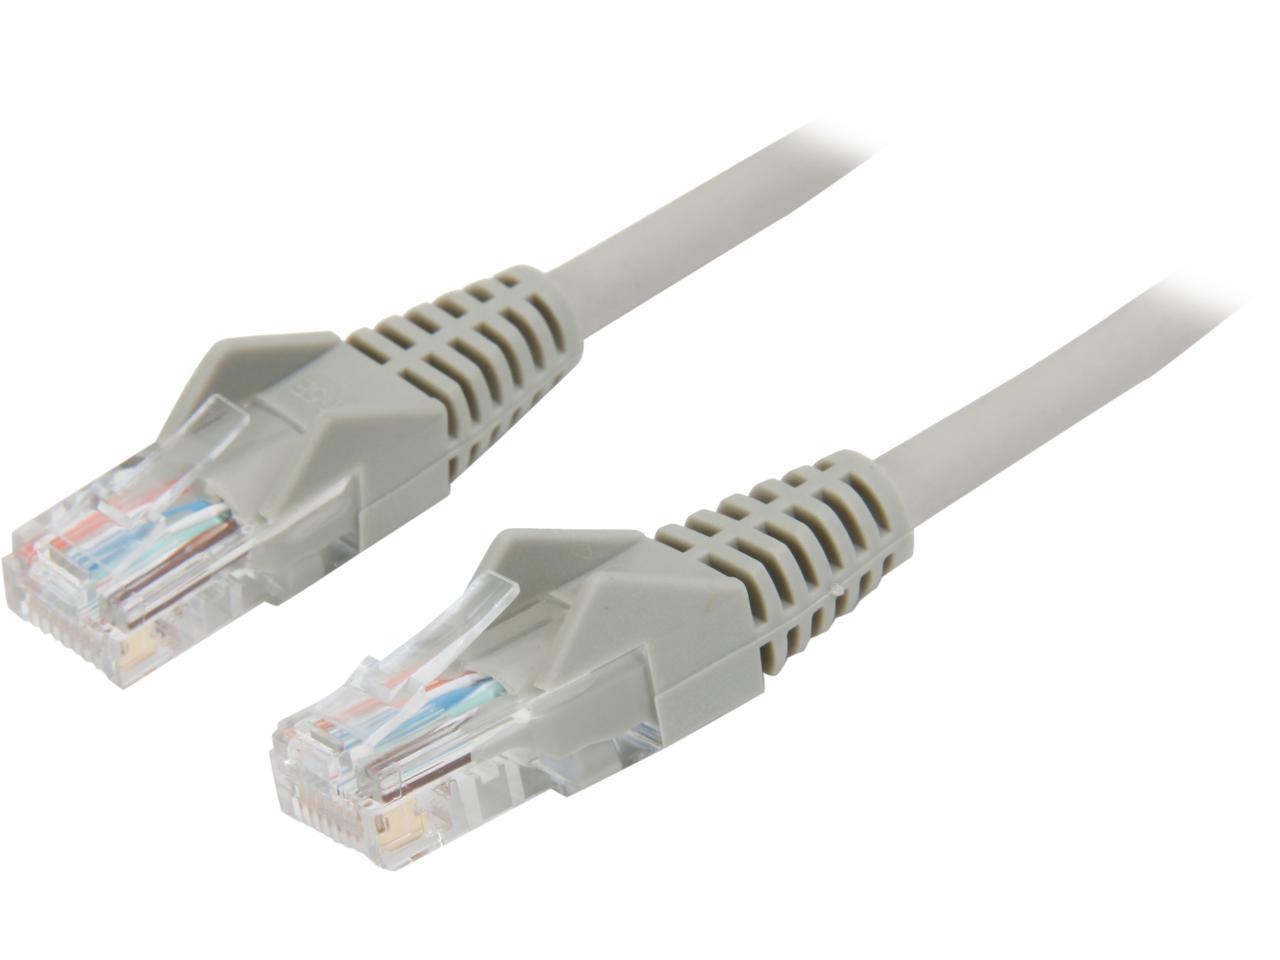 50 FT CAT5e Cat 5e CAT5 Generic RJ45 Ethernet LAN Snagless Network Patch Cable 